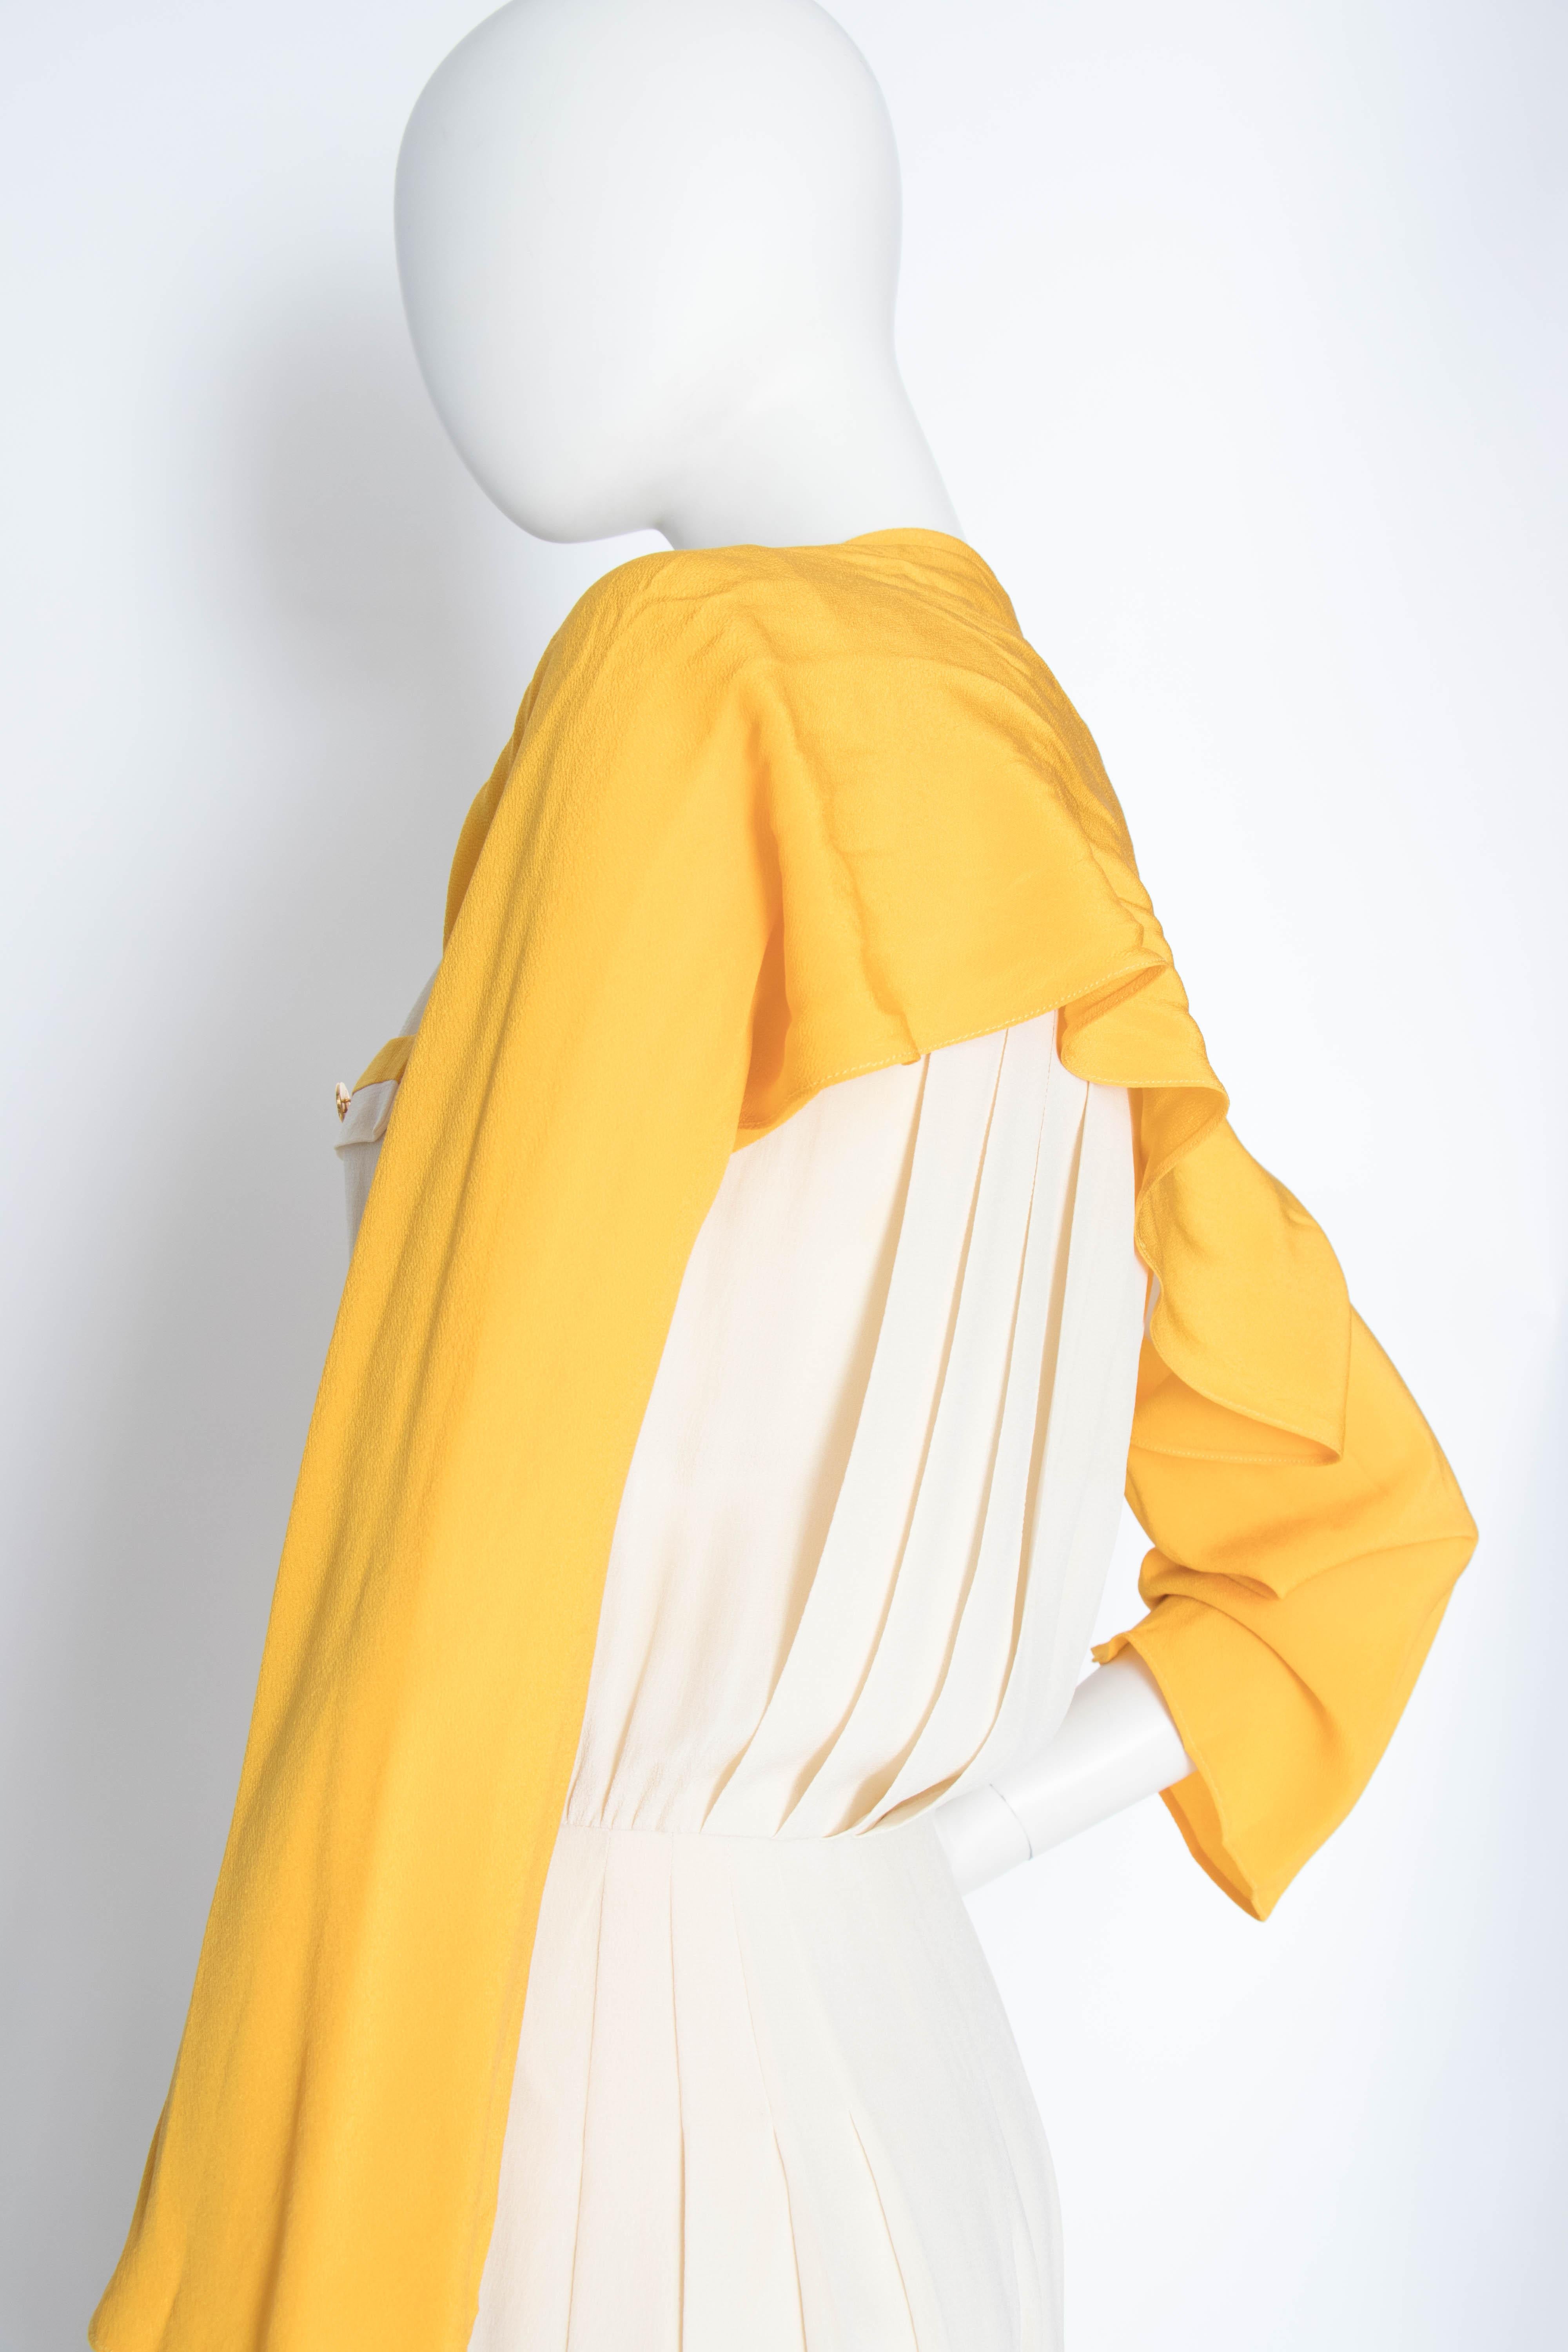 A 1980s Chanel Creme Silk Playsuit and Yellow Bolero Ensemble 1